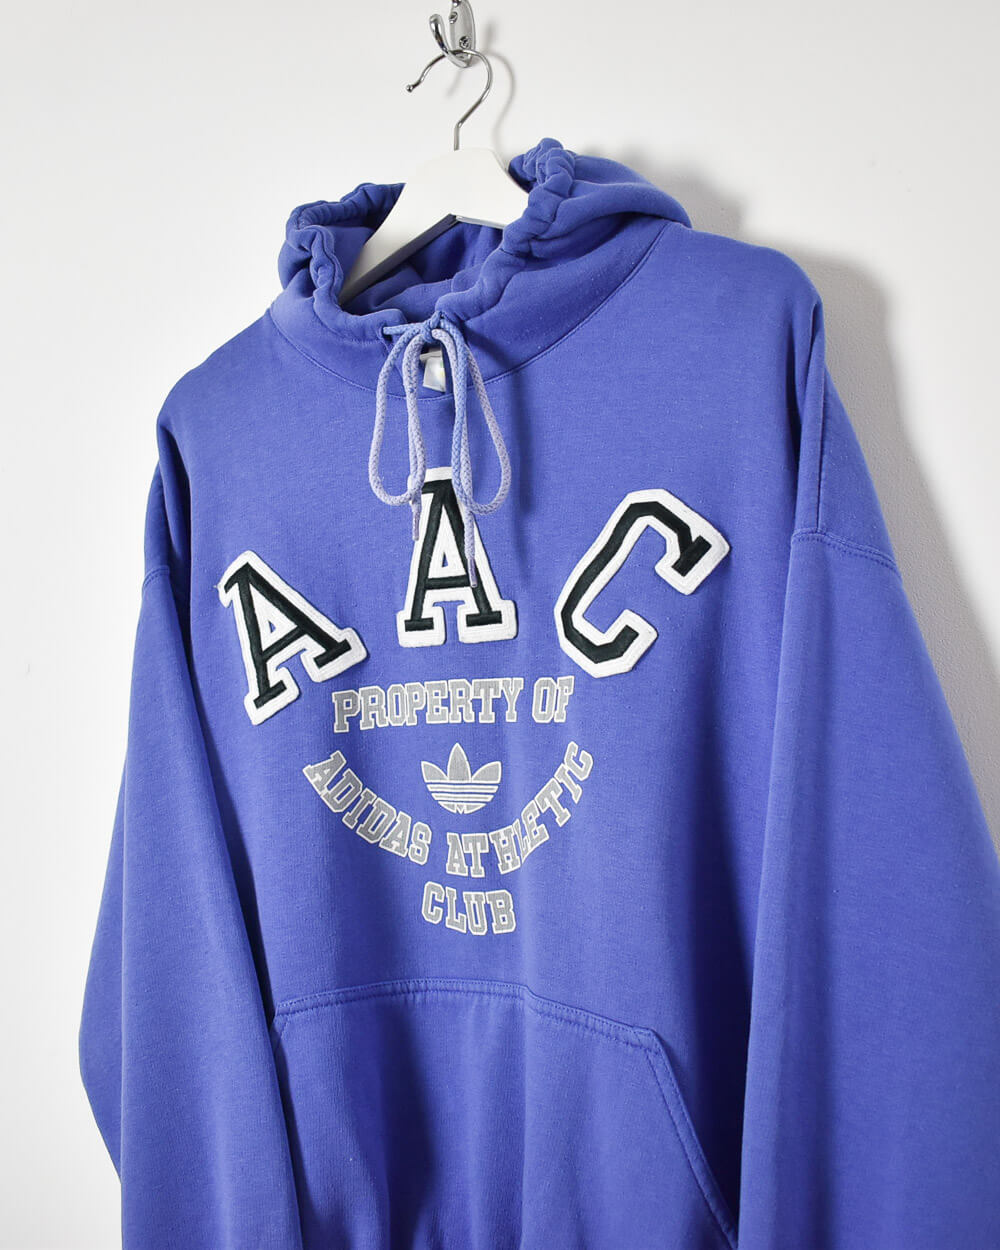 Adidas AAC Property of Adidas Athletic Club Hoodie - Medium - Domno Vintage 90s, 80s, 00s Retro and Vintage Clothing 